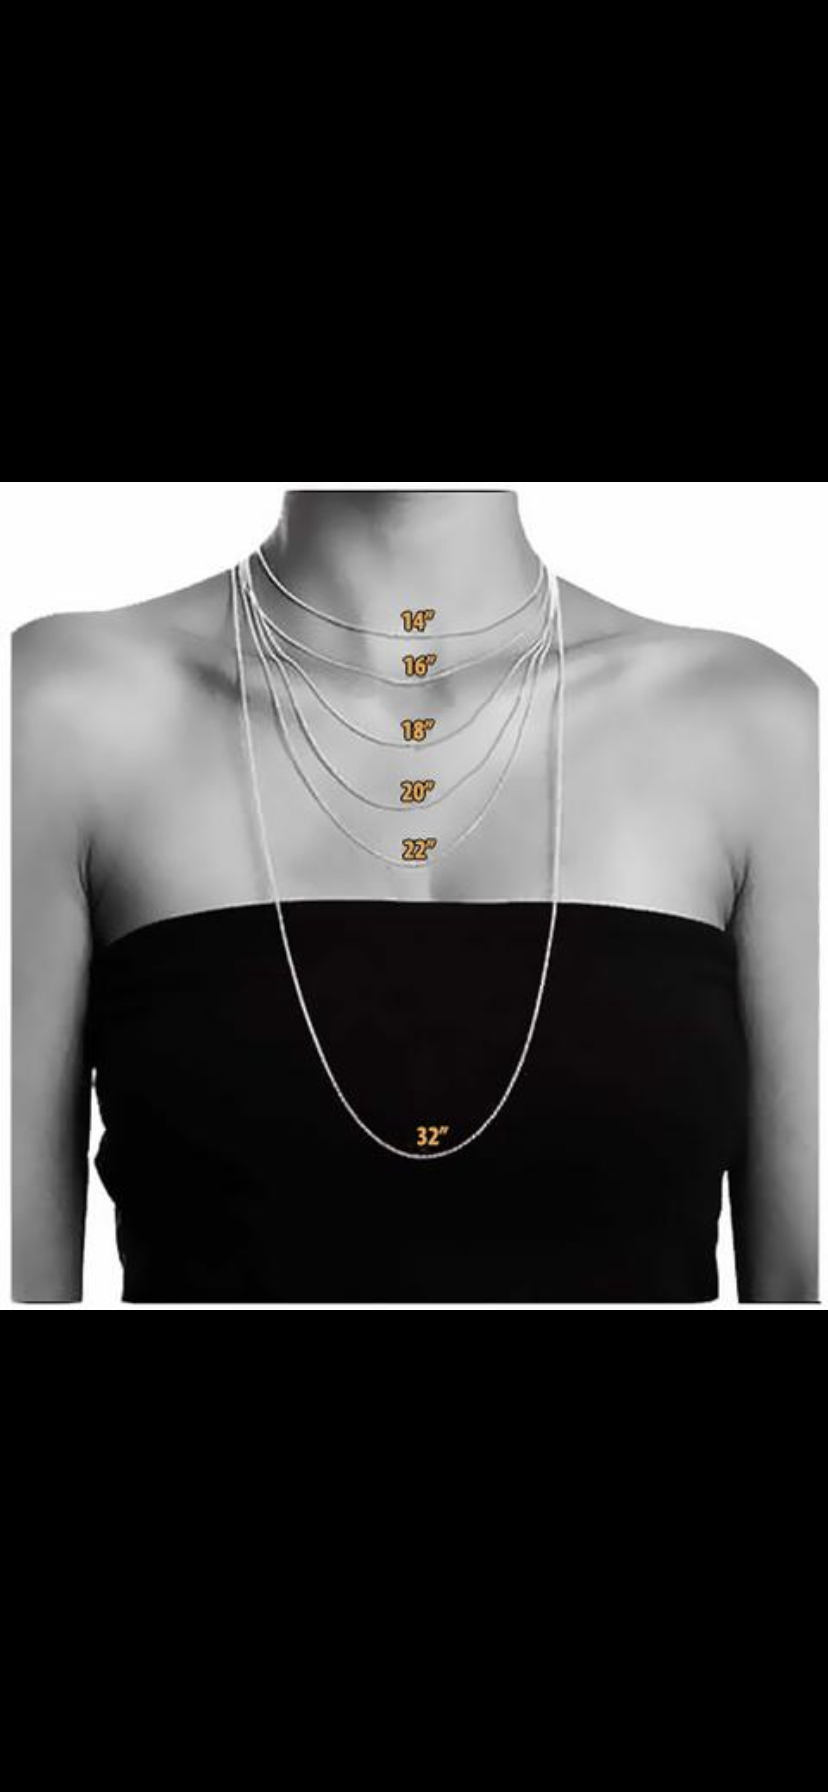 27.5" oval link necklace